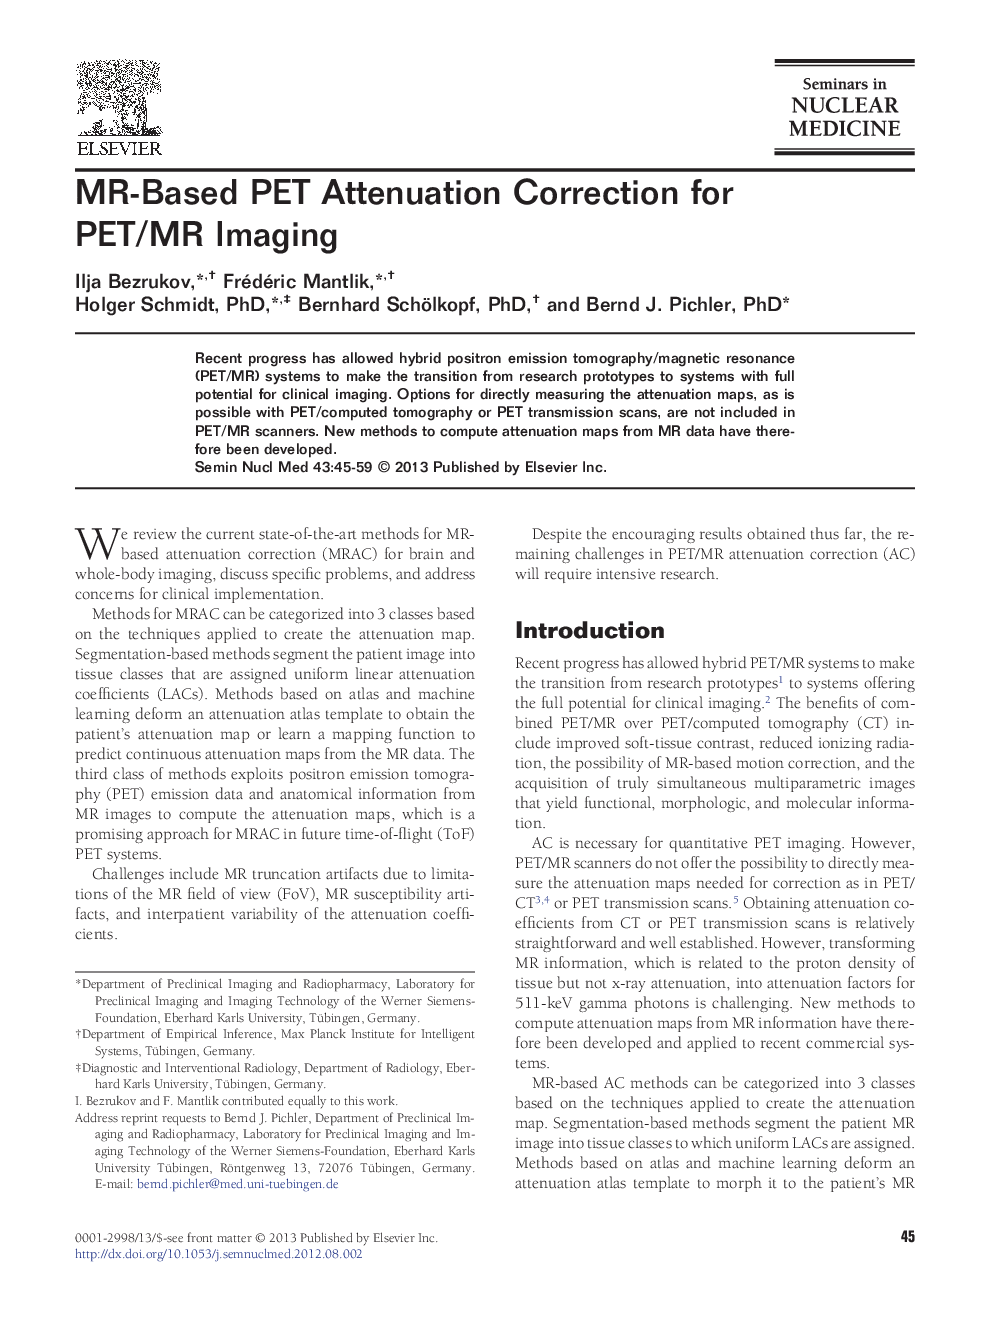 MR-Based PET Attenuation Correction for PET/MR Imaging 